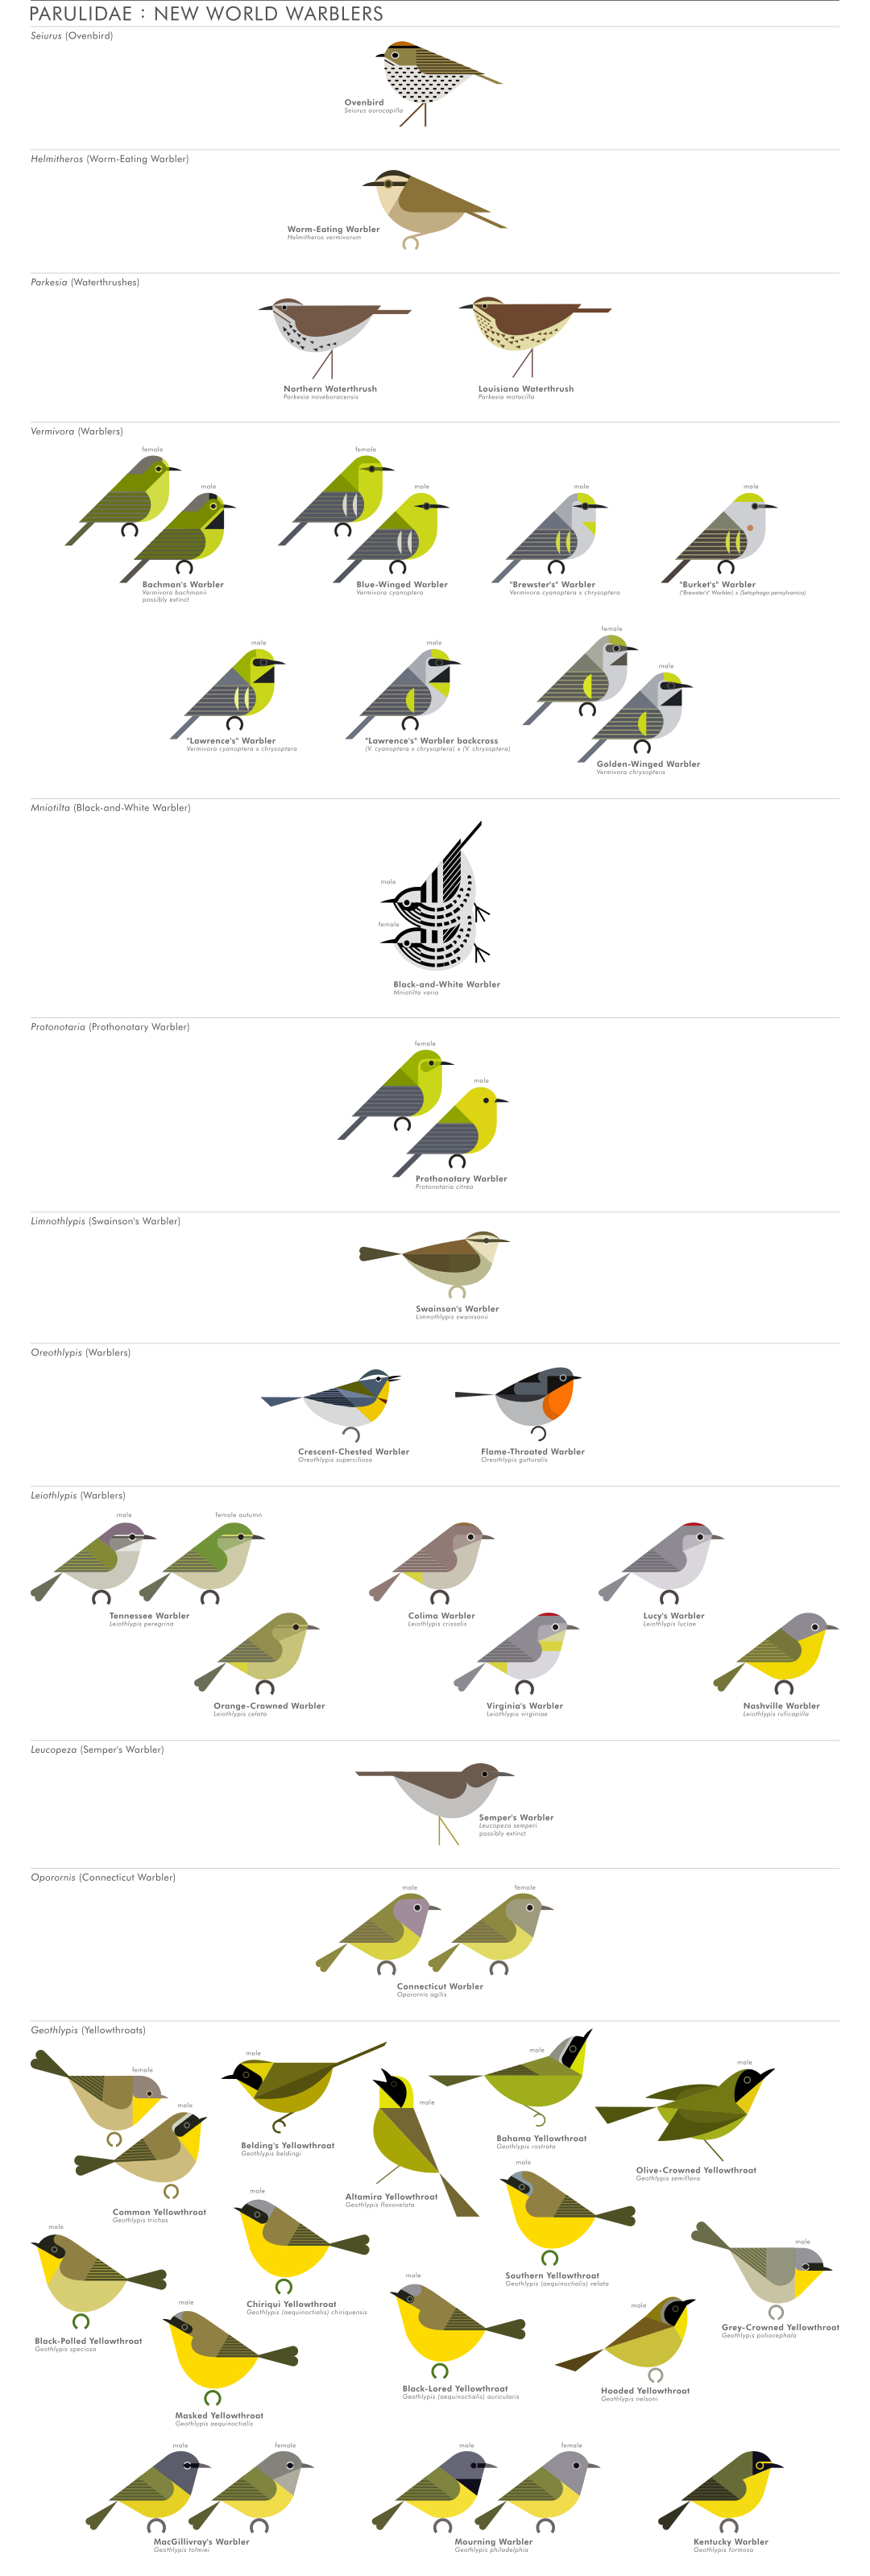 scott partridge - AVE - avian vector encyclopedia - new world warblers - bird vector art